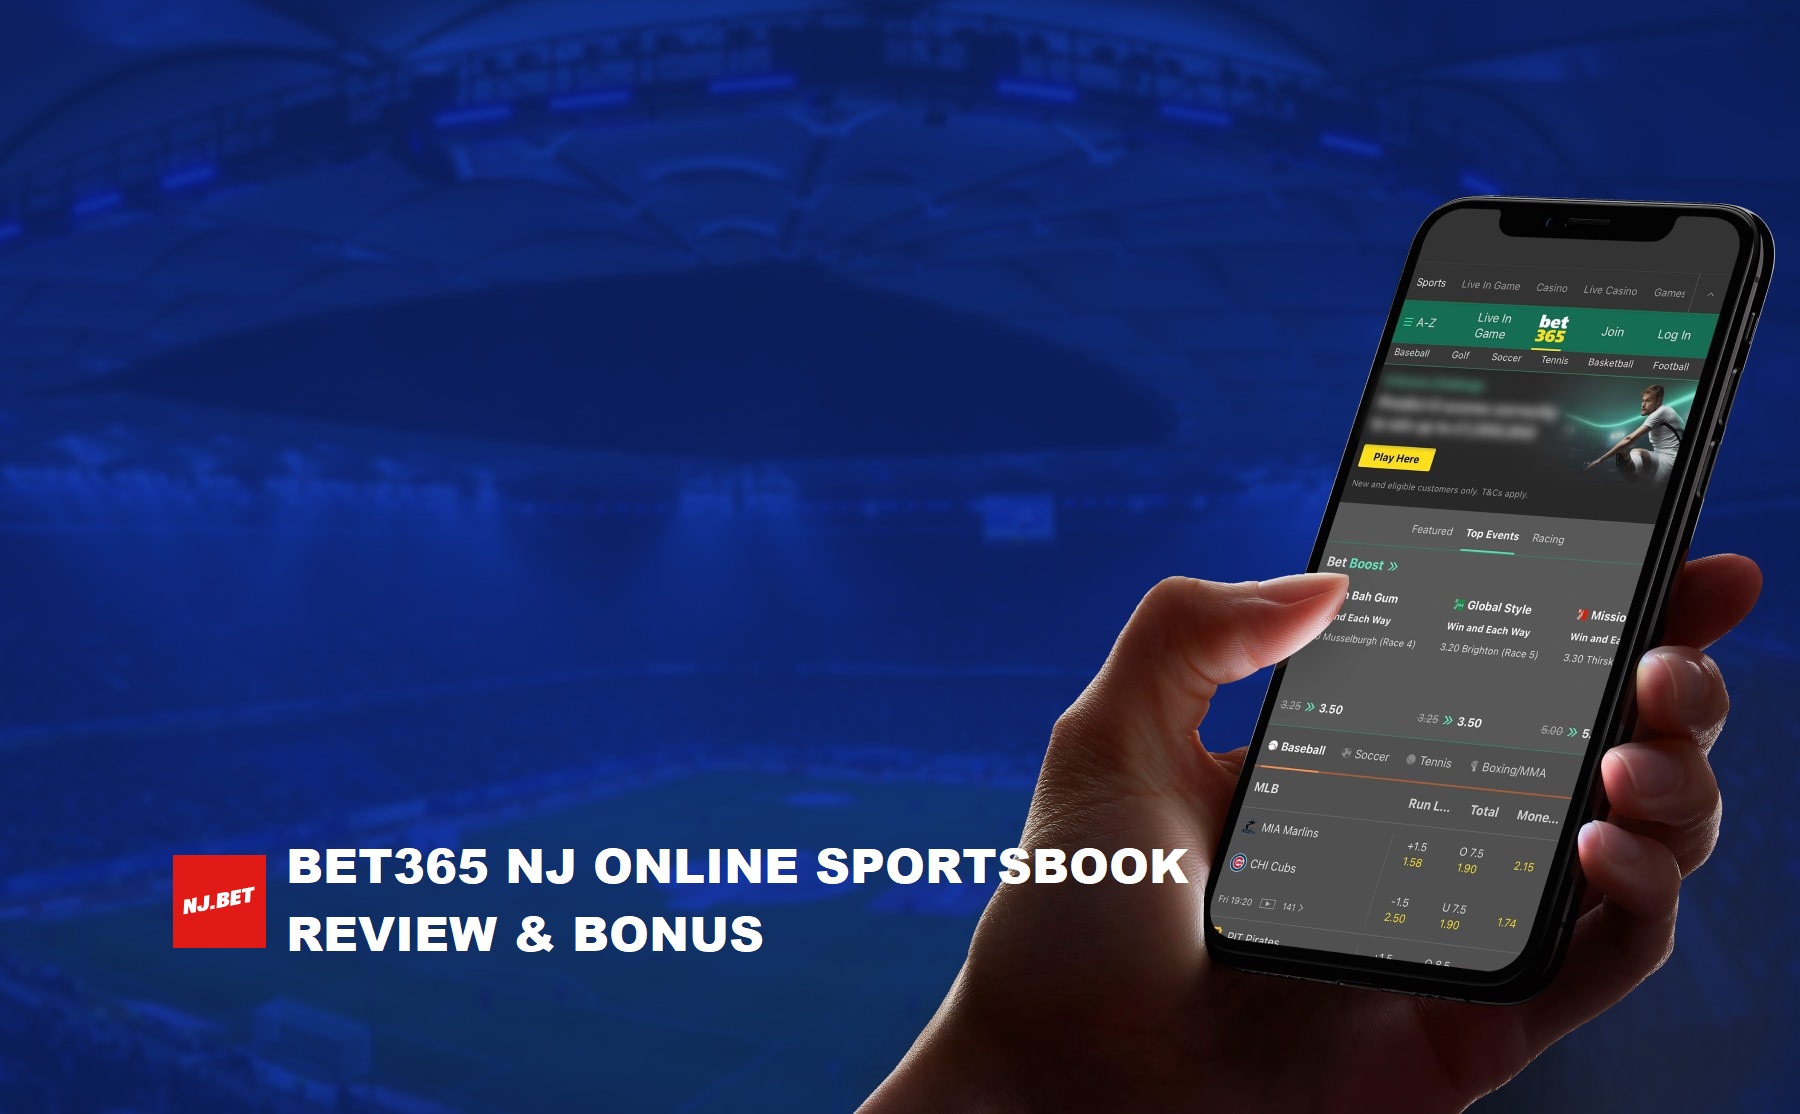 bet365 sportsbook New Jersey bonus overview